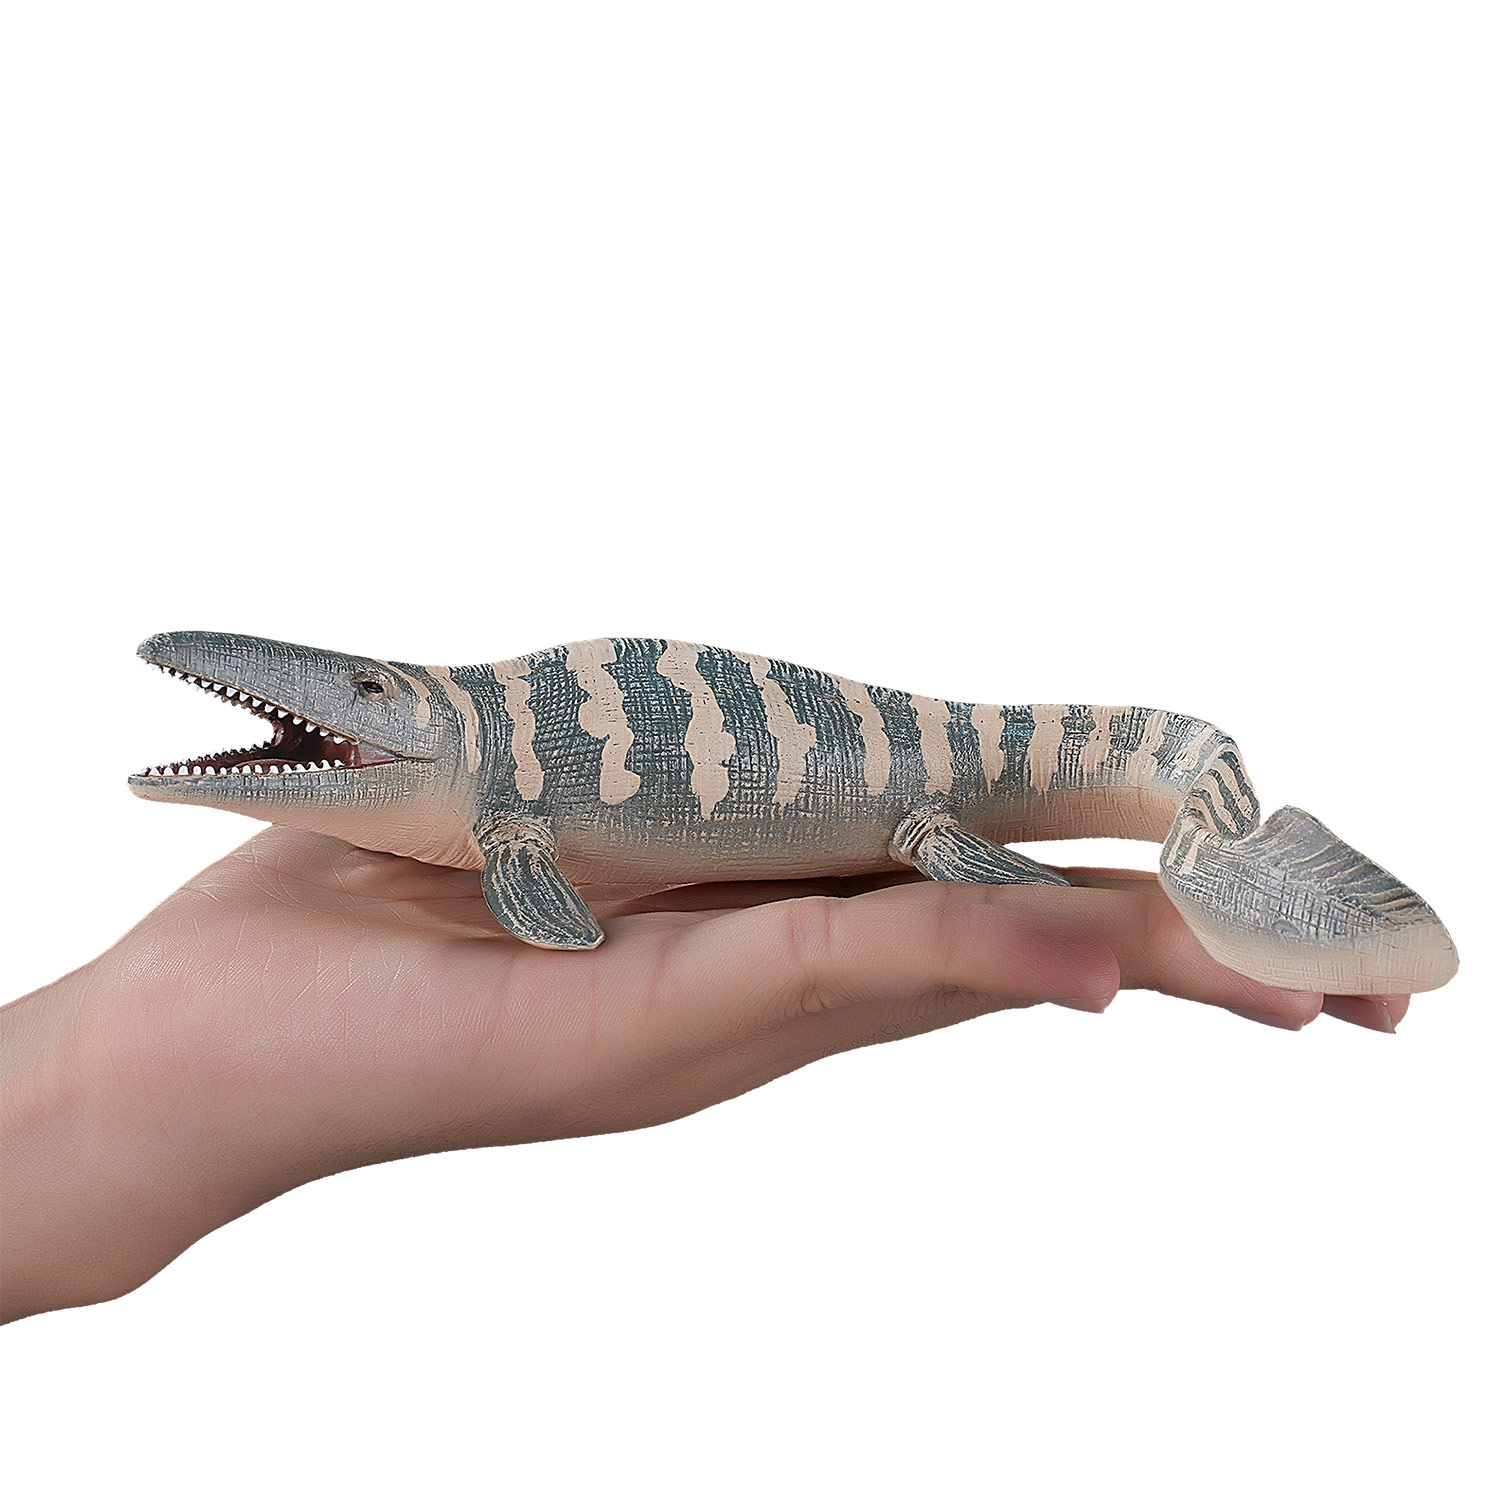 Mojo Préhistoire Tylosaurus - 387046